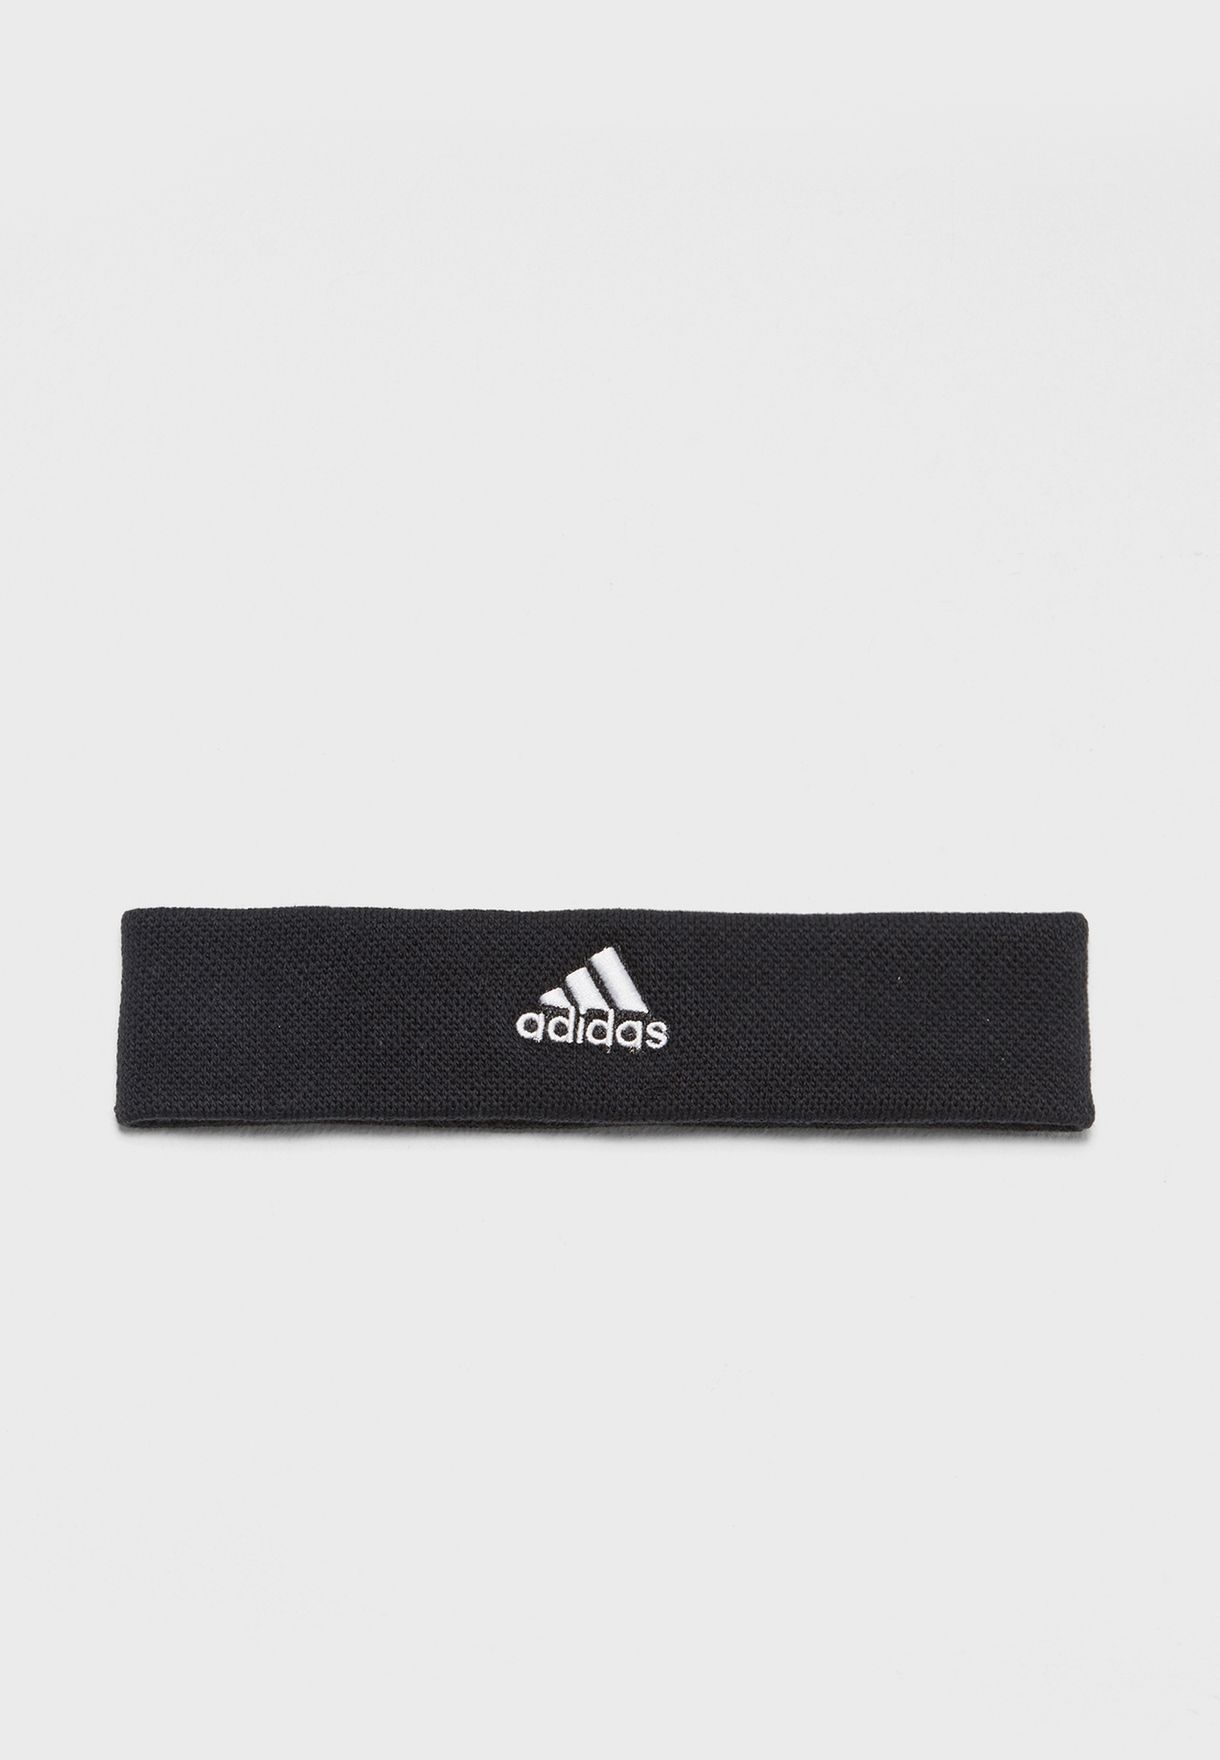 Buy adidas black Tennis Headband for 